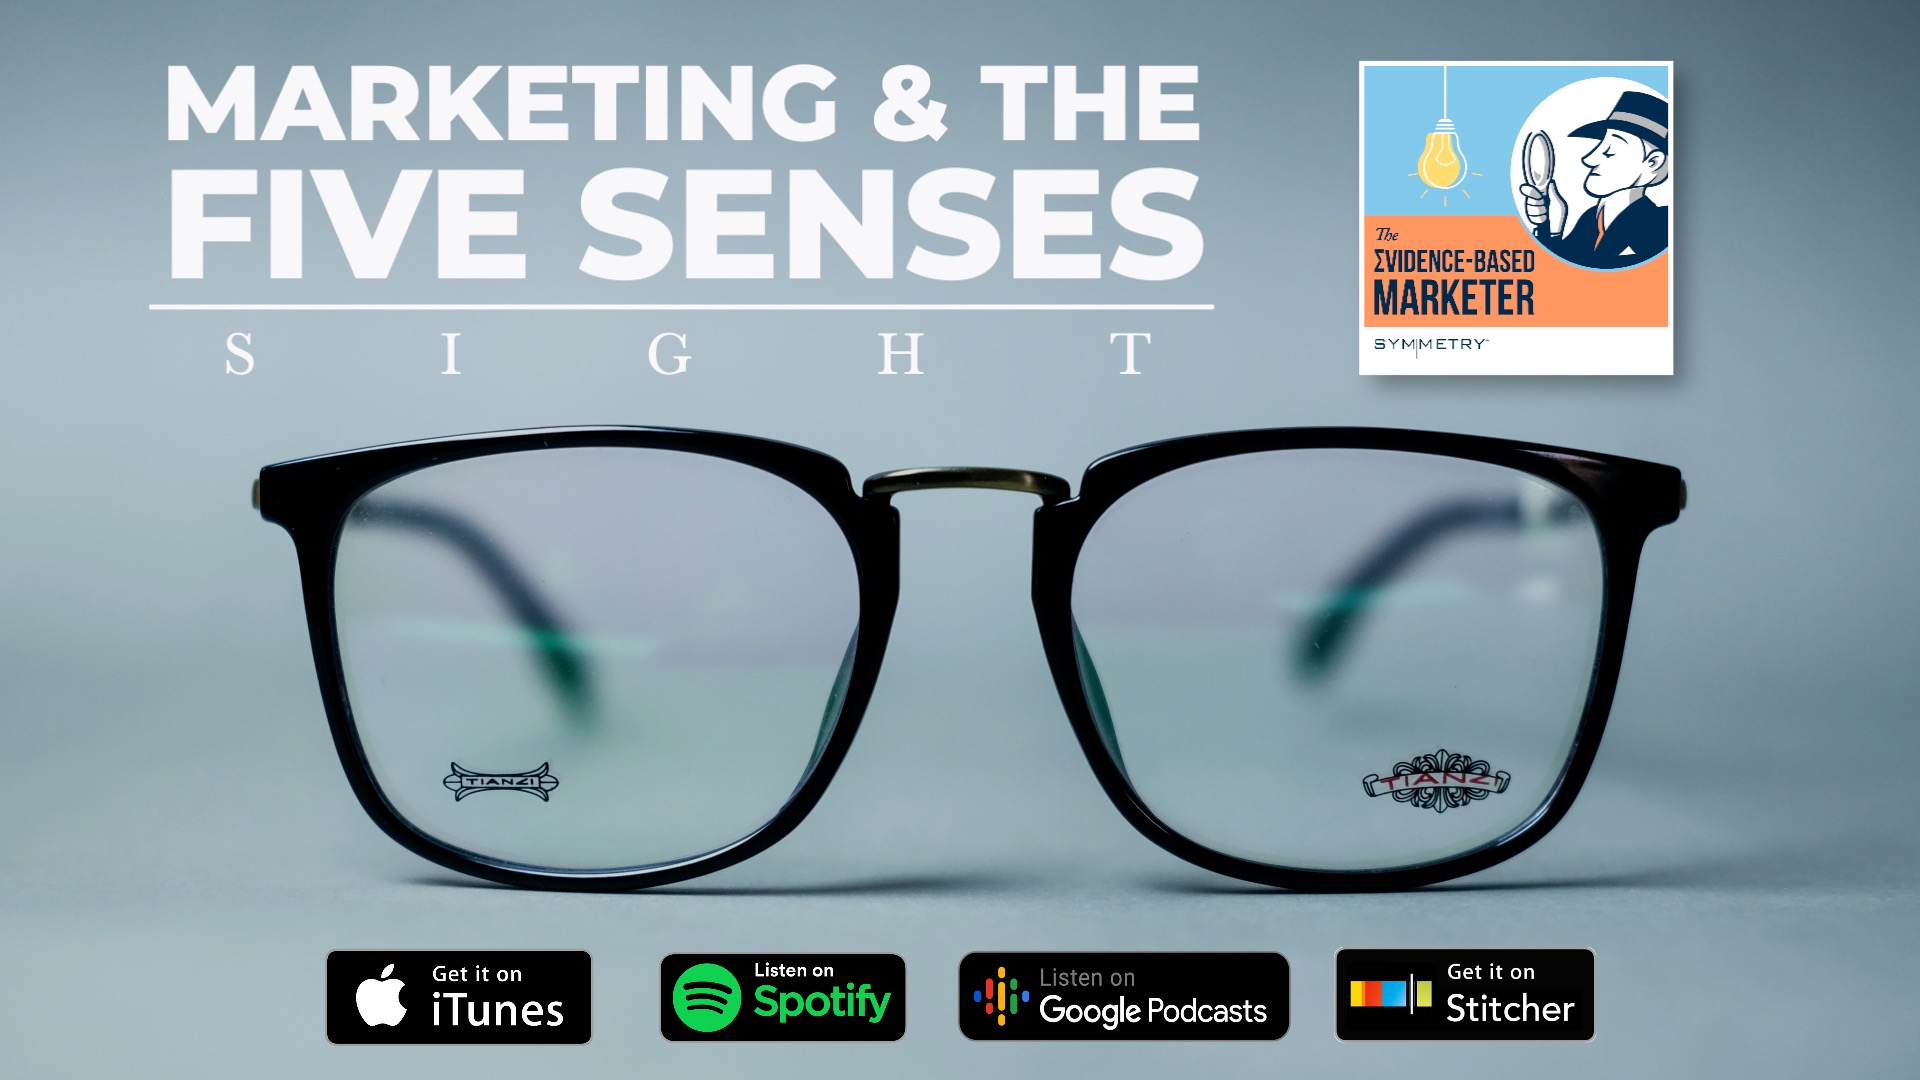 Marketing the Five Senses - Sight